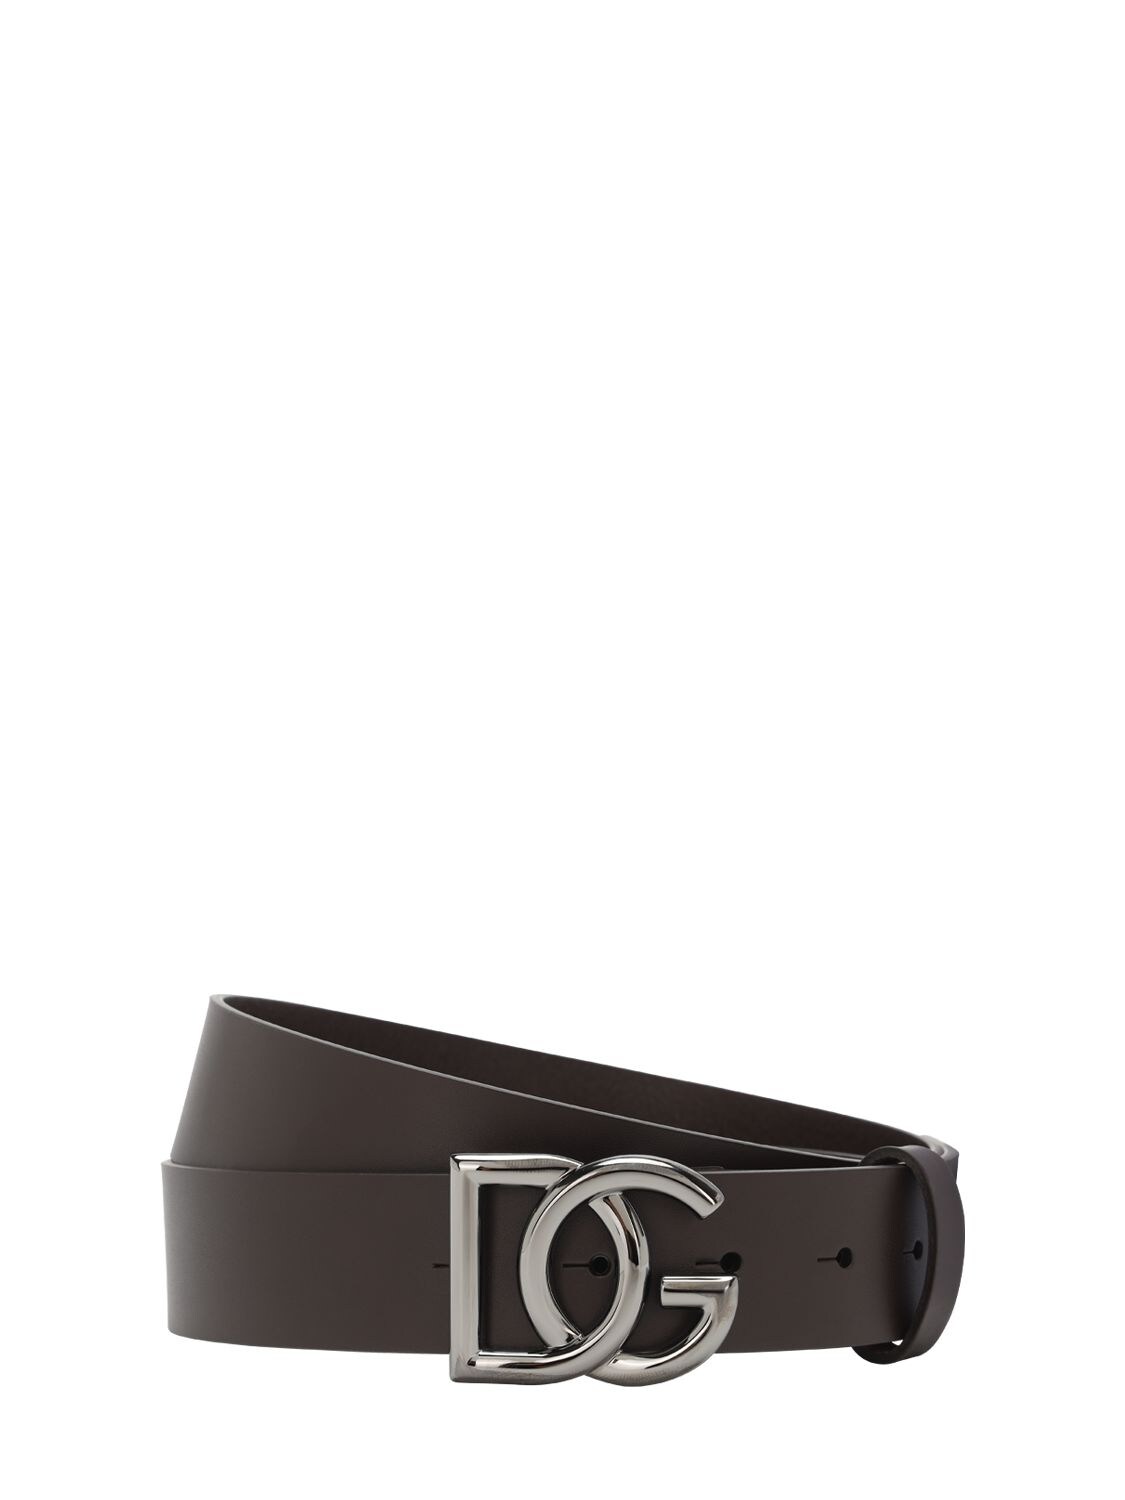 Dolce & Gabbana 35mm Leather Belt W/ Dg Buckle In Brown